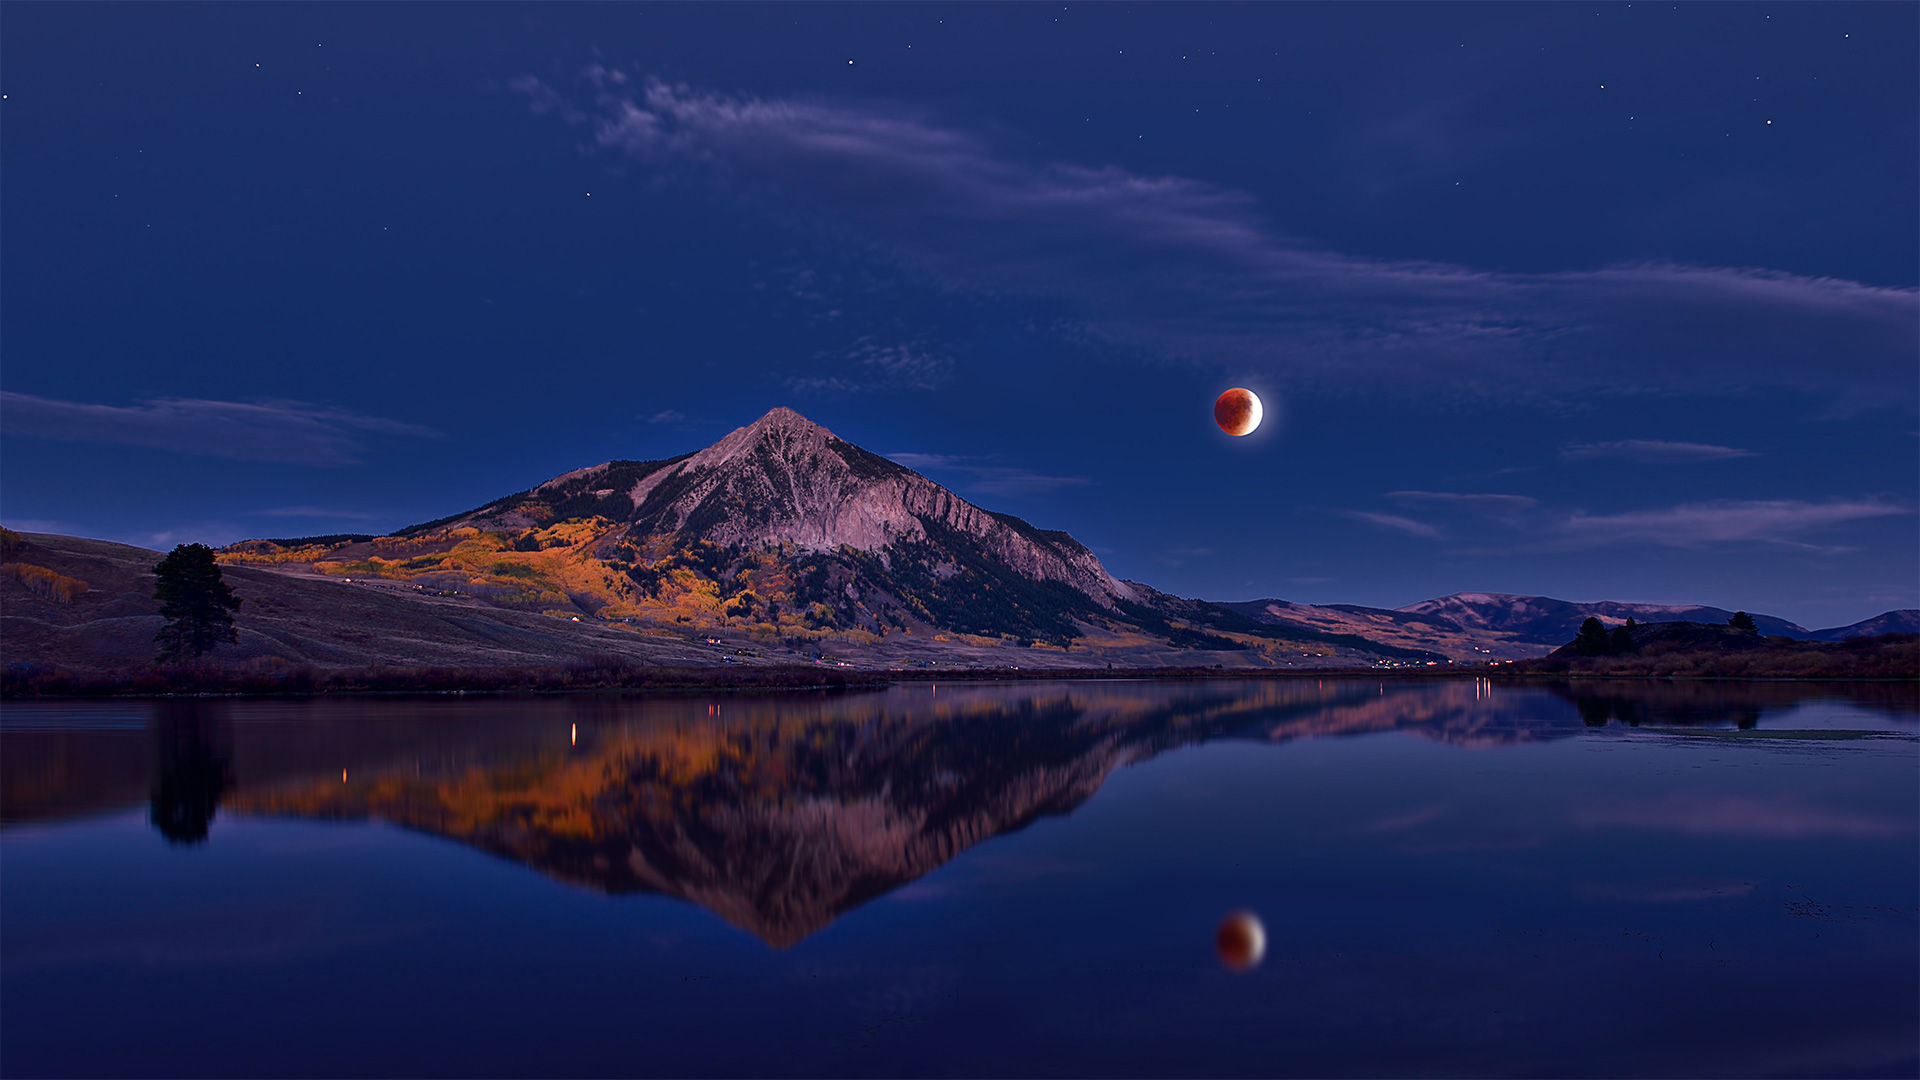 Lunar eclipse above Mount Crested Butte